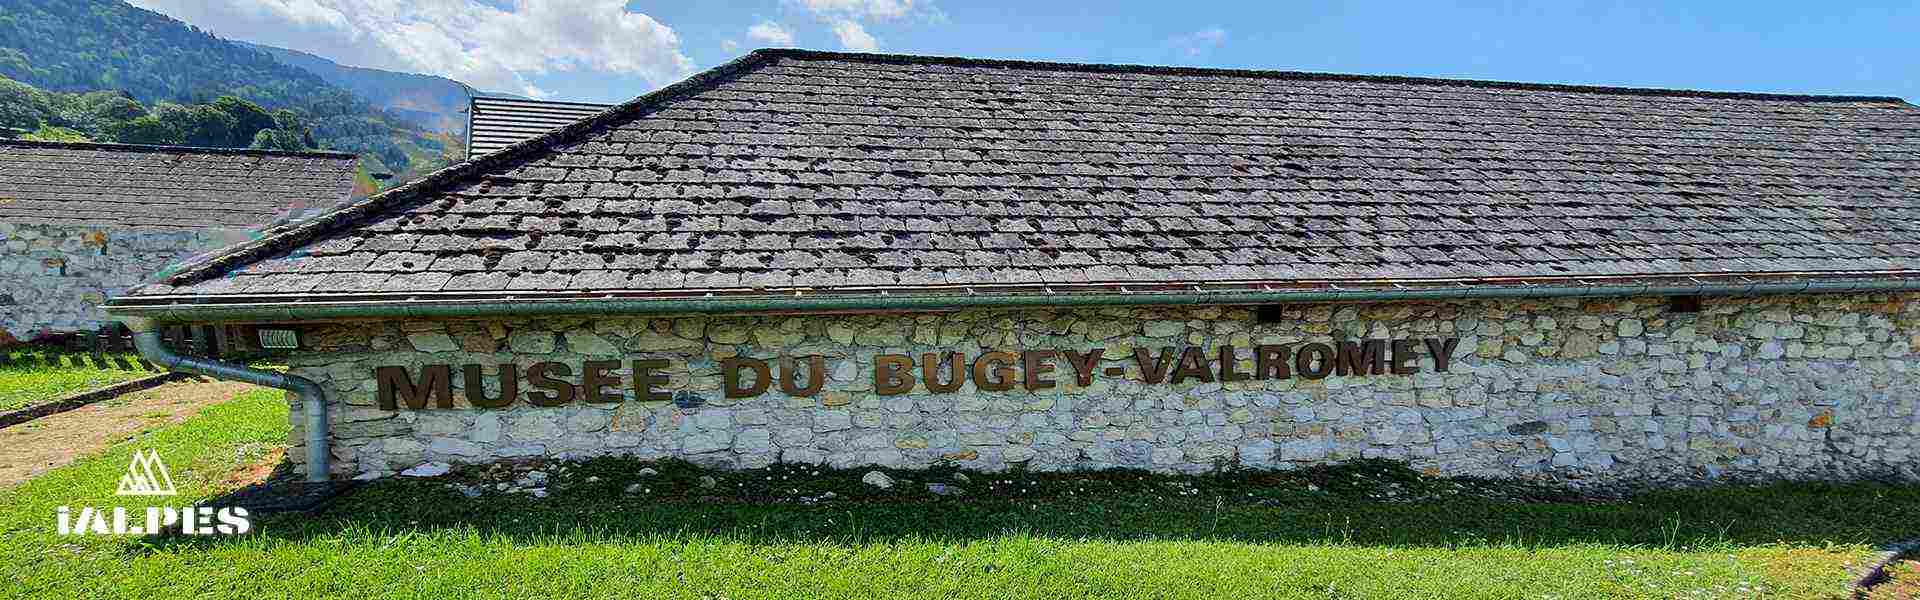 Musée du Bugey-Valromey, Ain